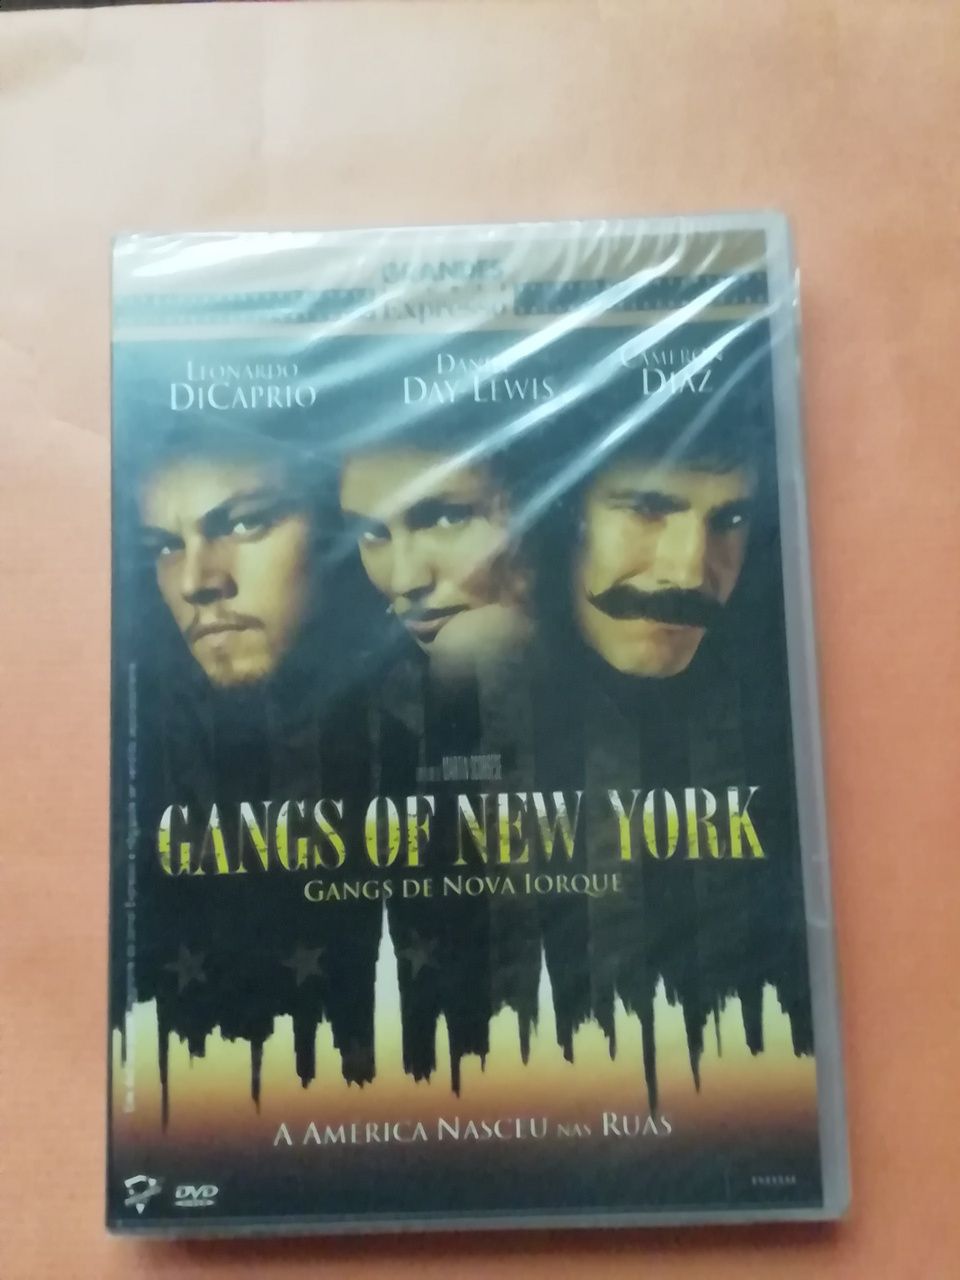 DVD Gangs of New York, selado